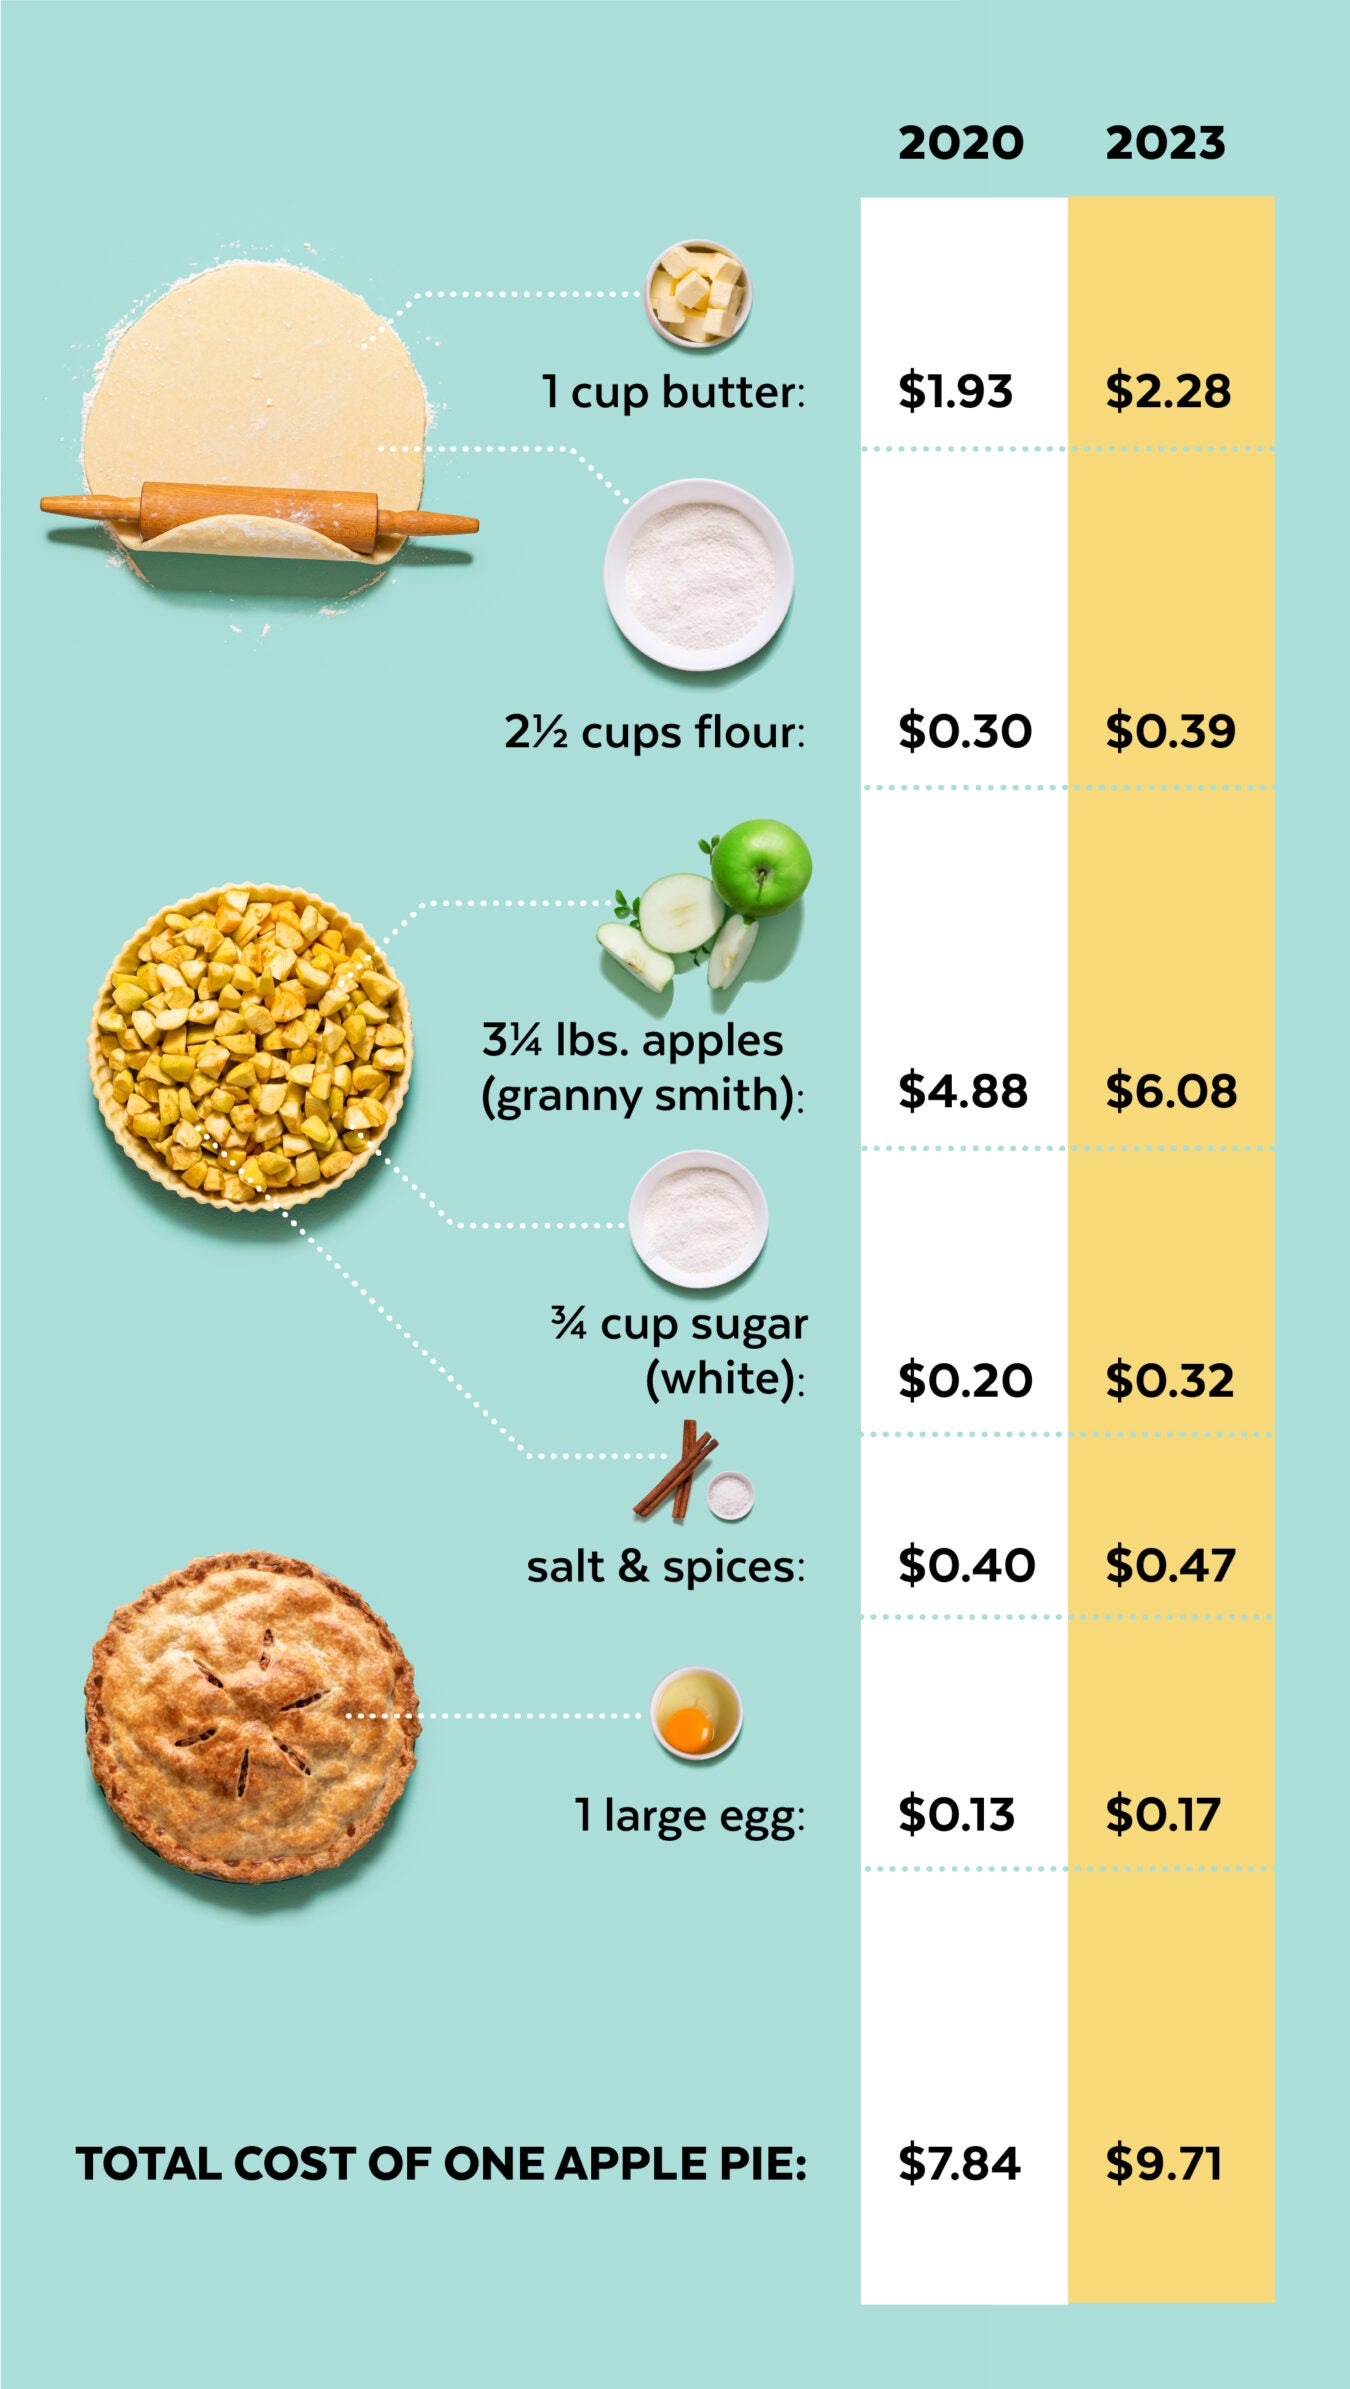 Graphic breaks down cost of making an apple pie - $7.84 in 2020 vs. $9.71 in 2023.